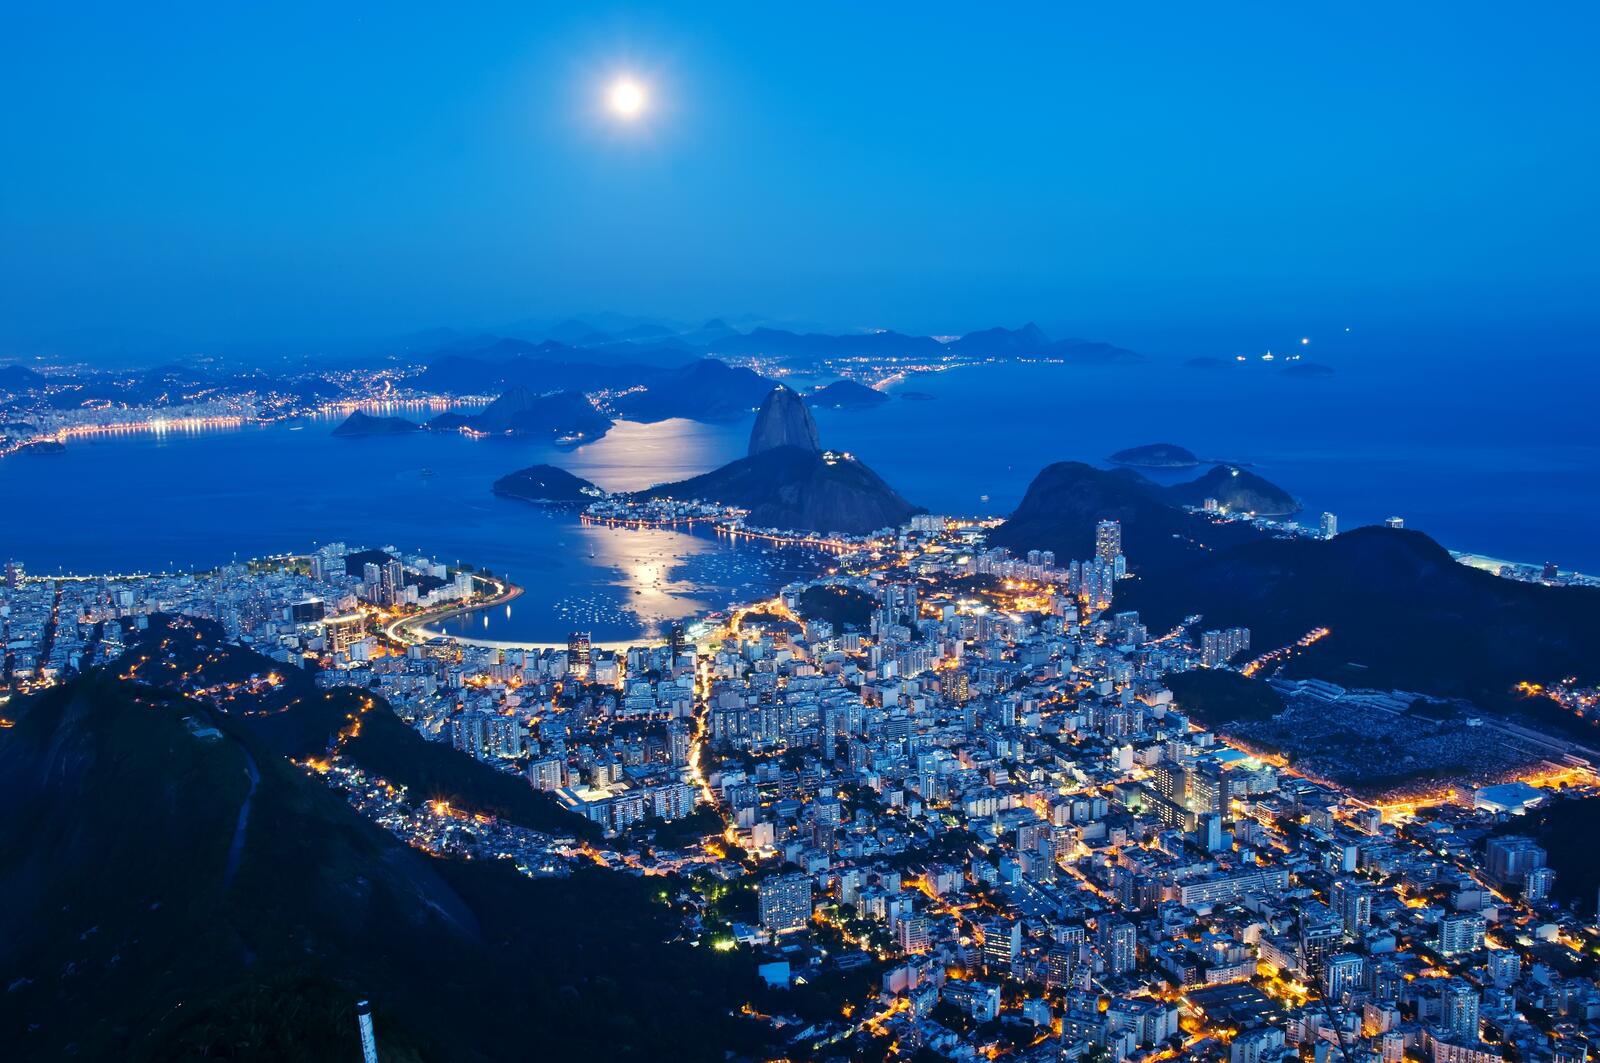 Wallpapers night city skyline Rio de Janeiro on the desktop